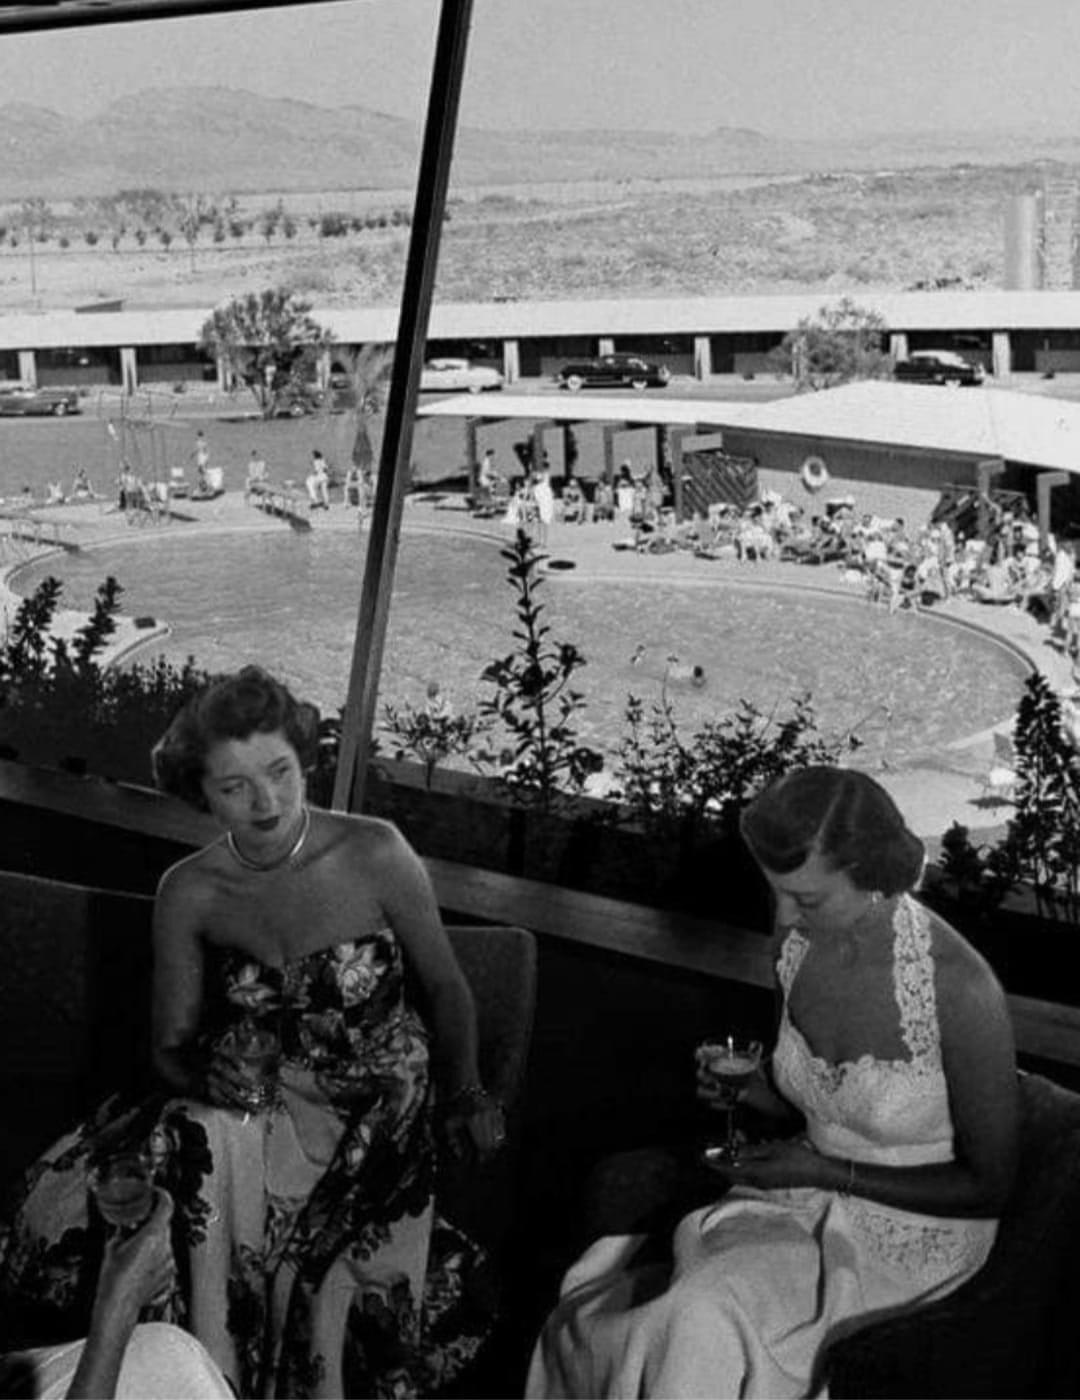 Cocktails in the "Sky Room" at the Desert Inn in Las Vegas, Nevada in 1950.